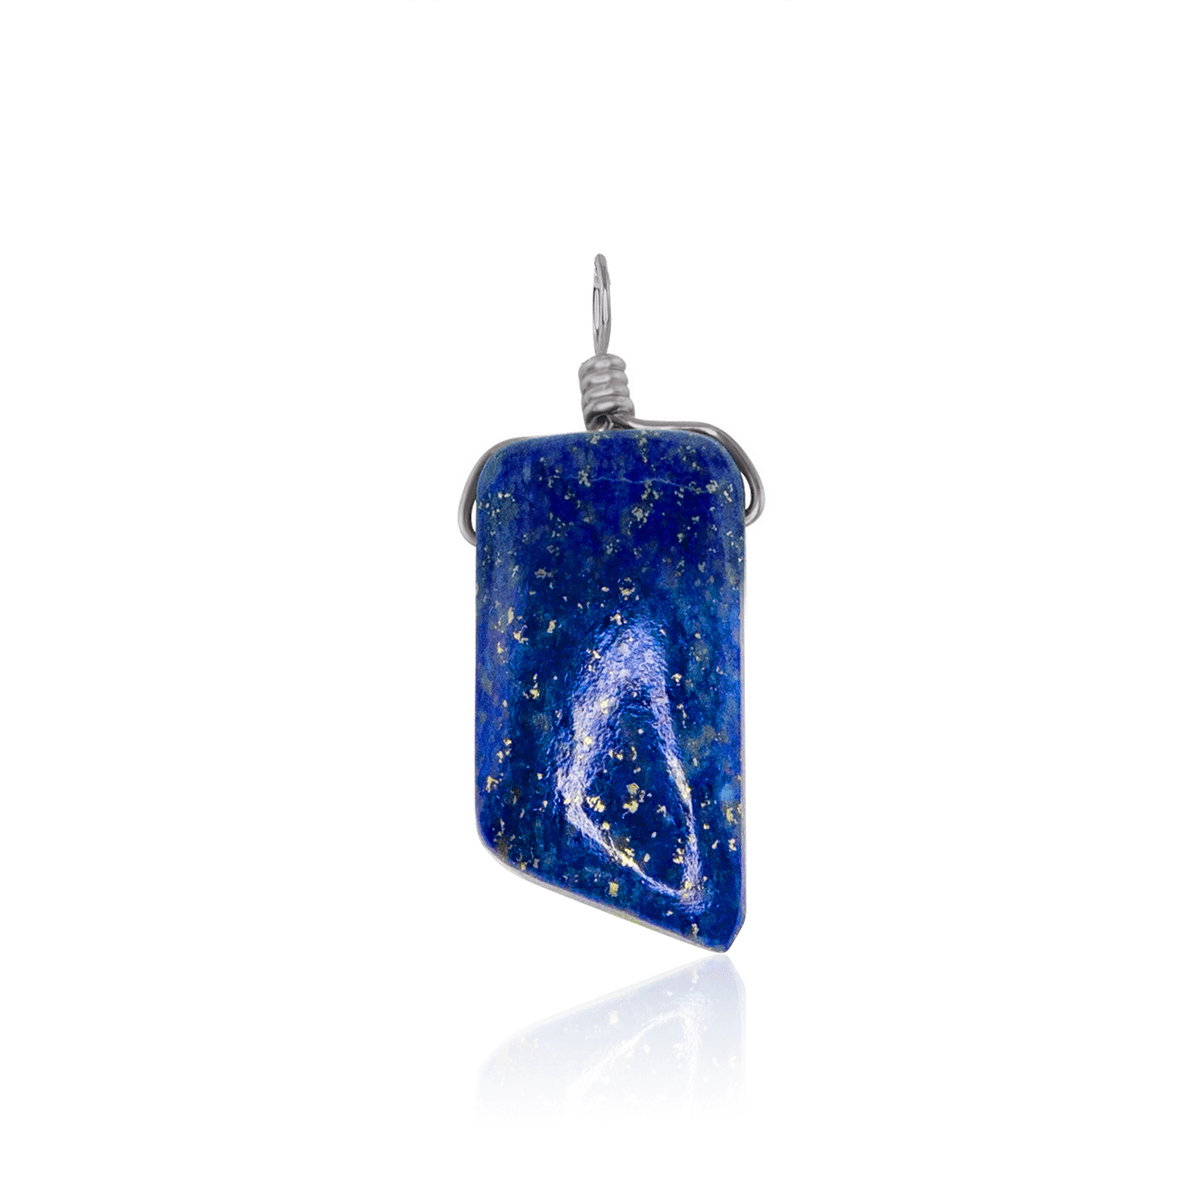 Small Smooth Lapis Lazuli Crystal Pendant with Gentle Point - Small Smooth Lapis Lazuli Crystal Pendant with Gentle Point - Stainless Steel - Luna Tide Handmade Crystal Jewellery